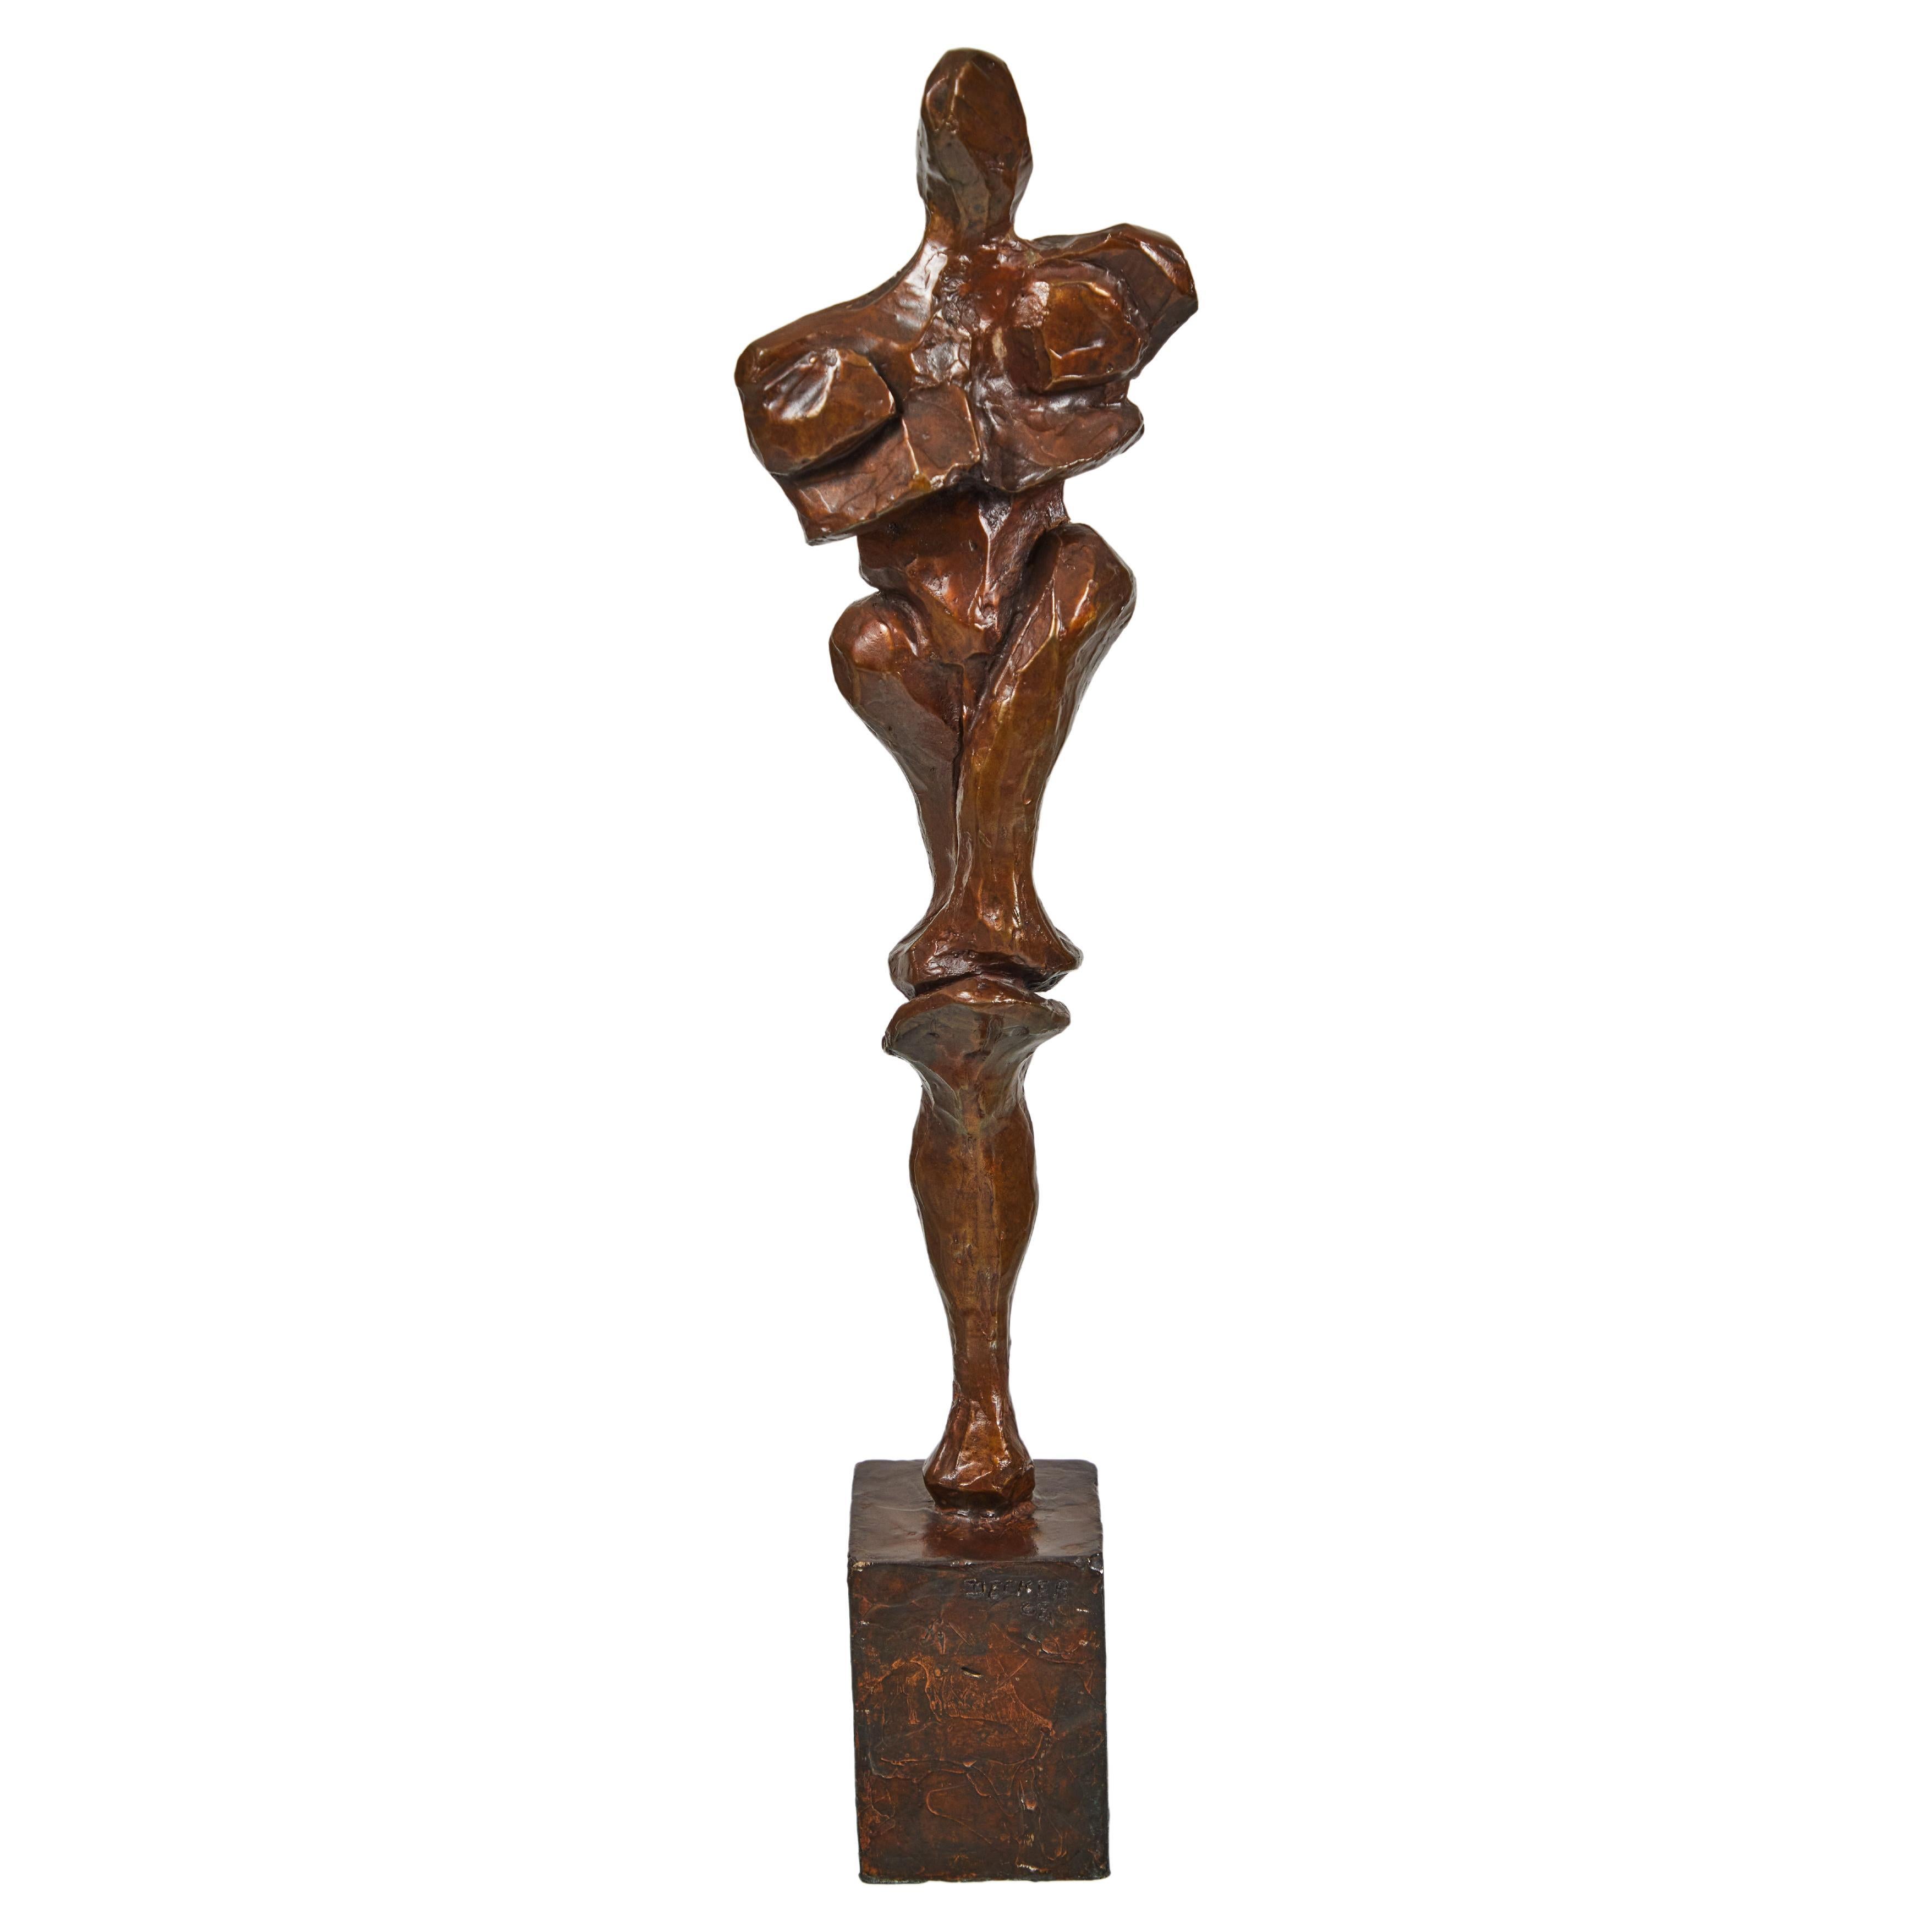 Abstracted Figure in Bronze by Sanford 'Sandy' Decker